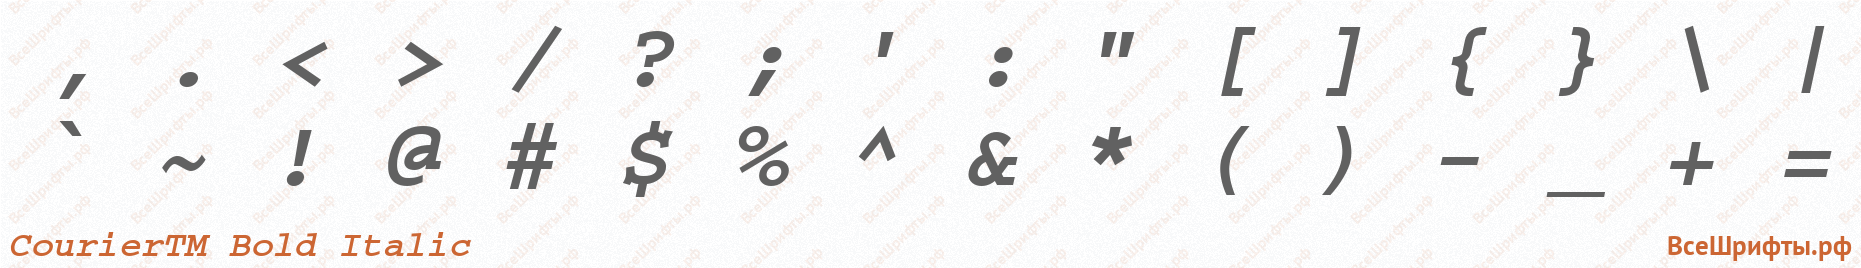 Шрифт CourierTM Bold Italic со знаками препинания и пунктуации